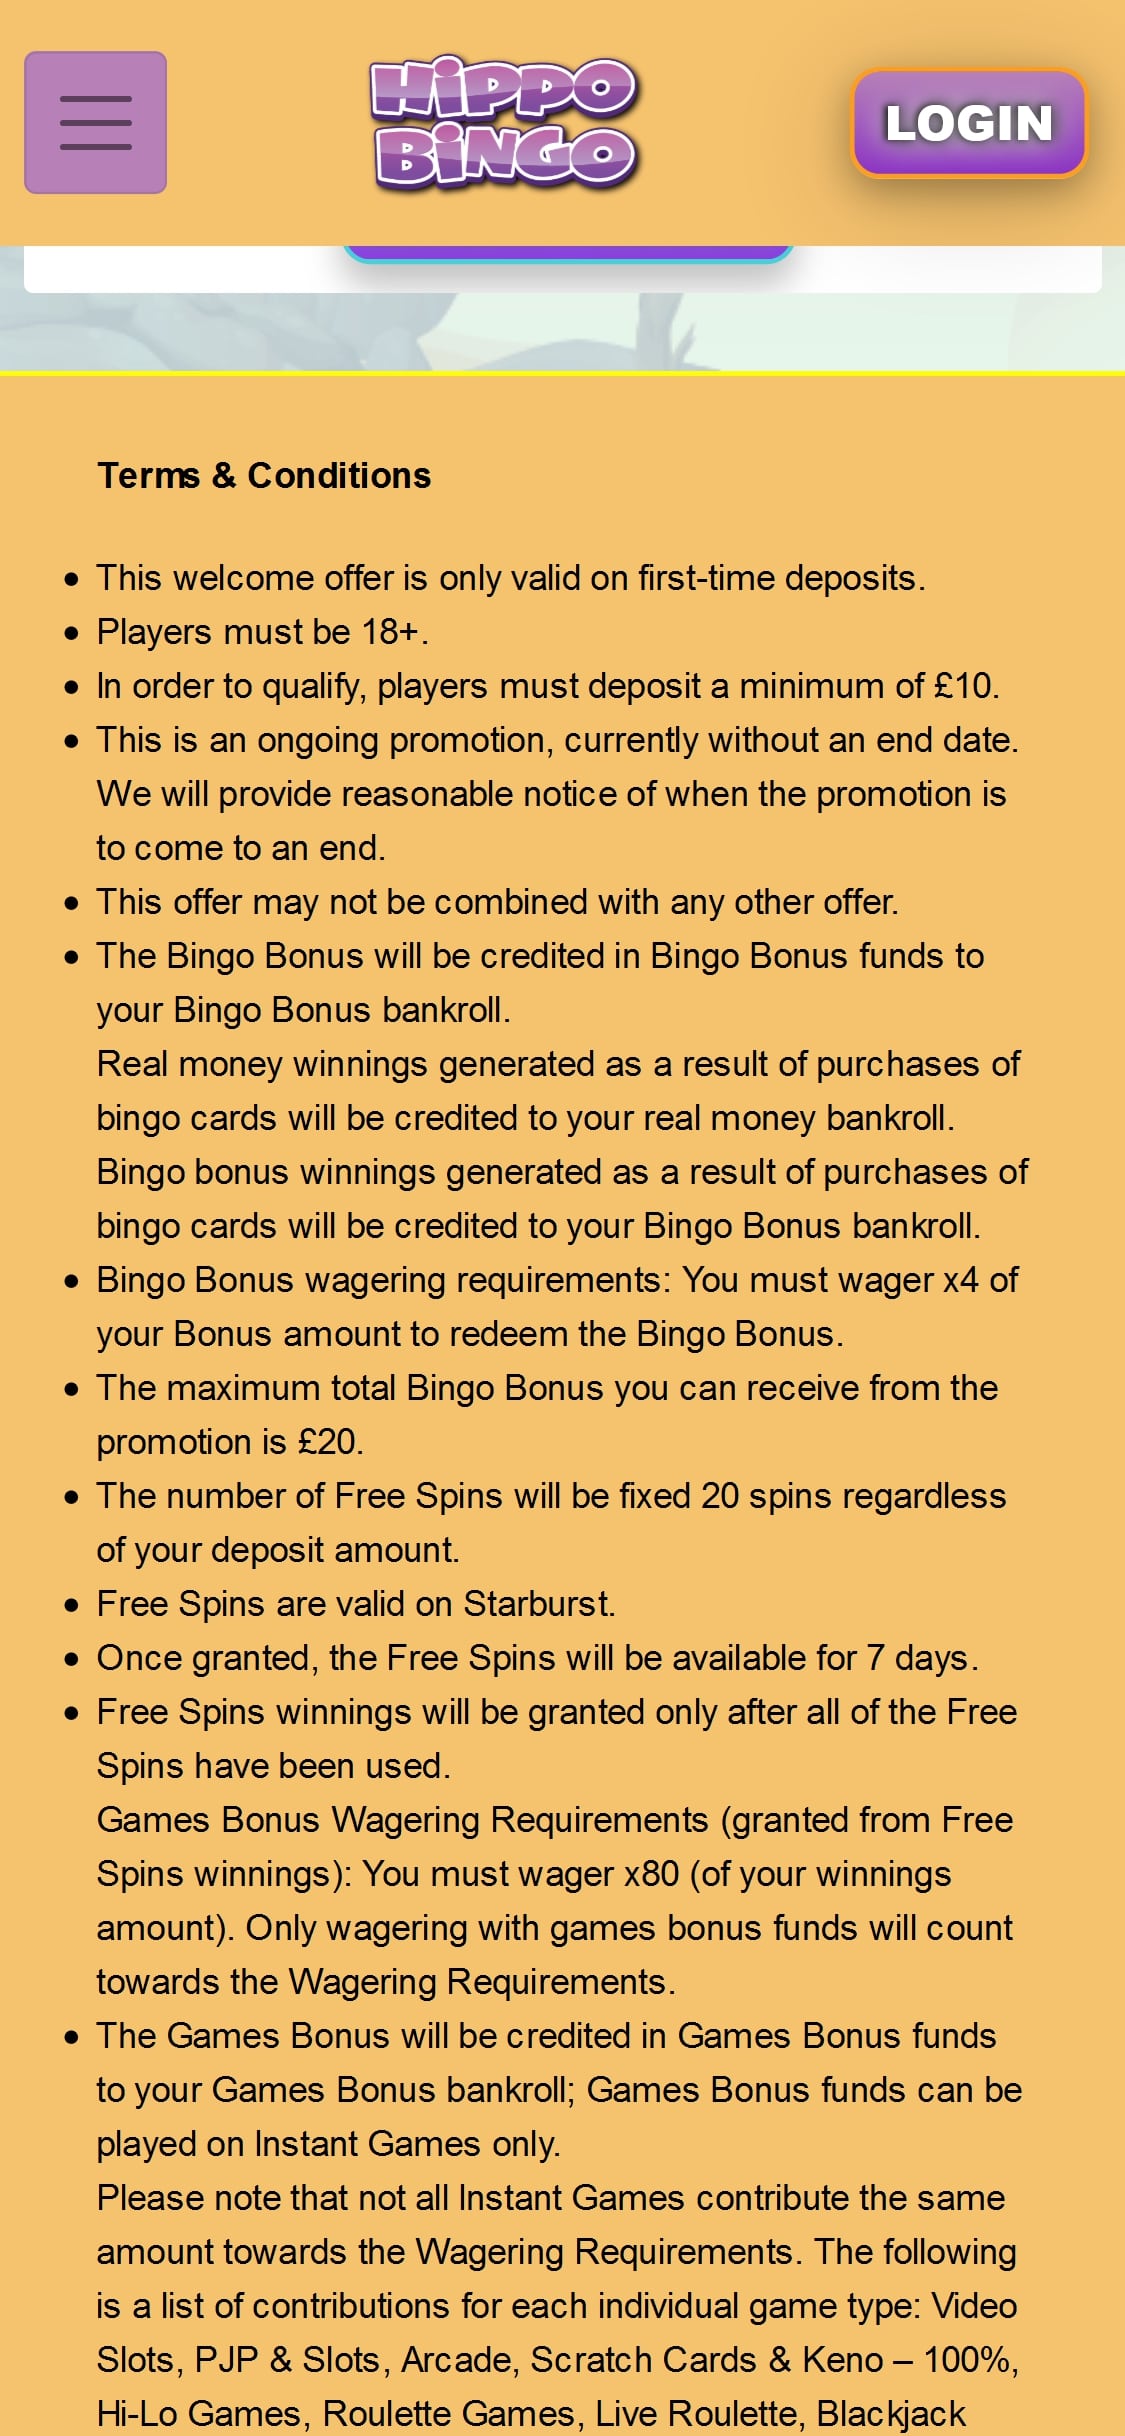 Hippo Bingo Casino Mobile No Deposit Bonus Review